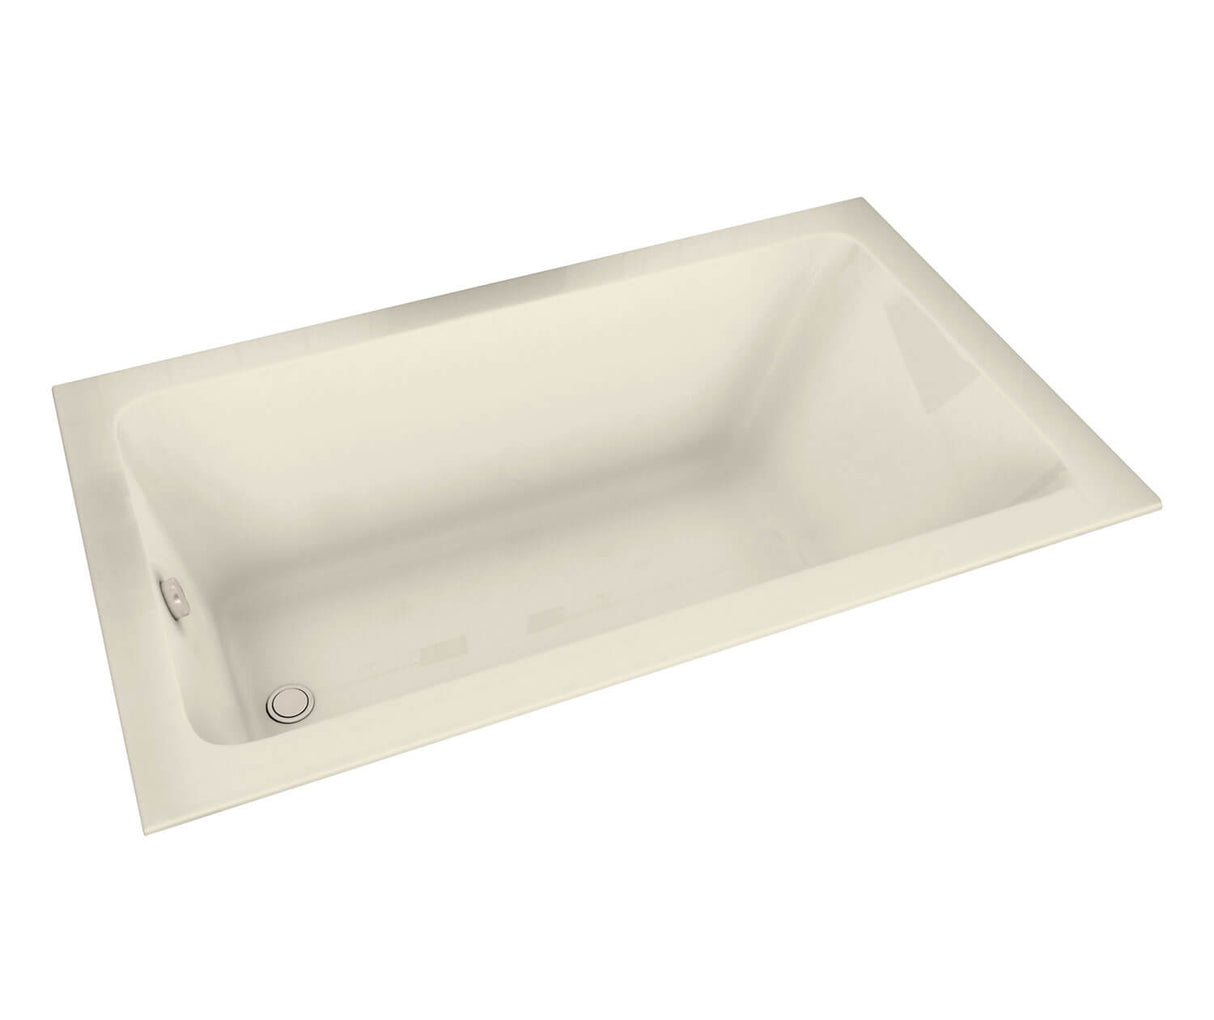 MAAX 101458-097-004 Pose 6632 Acrylic Drop-in End Drain Combined Whirlpool & Aeroeffect Bathtub in Bone